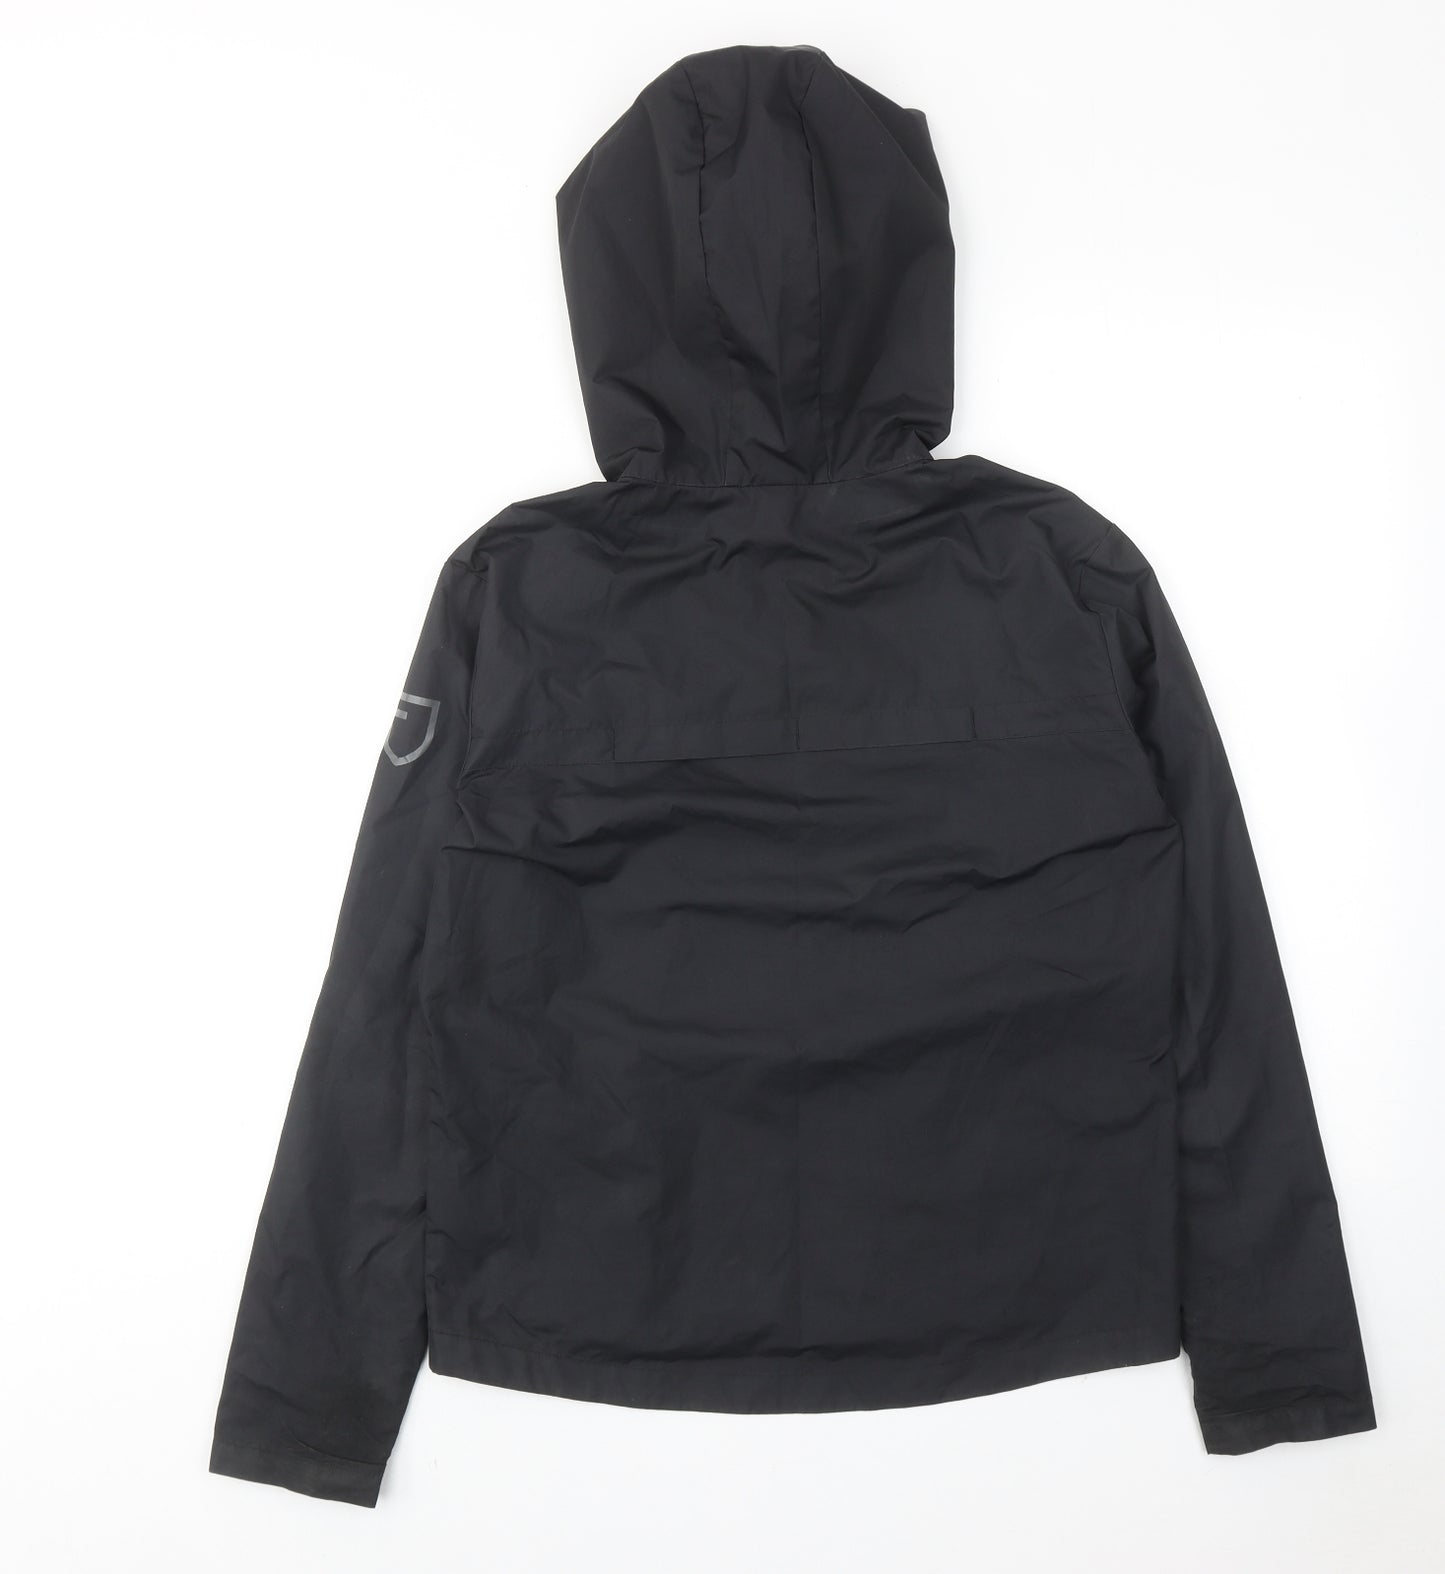 DECATHLON Boys Black Basic Jacket Jacket Size 14 Years Zip